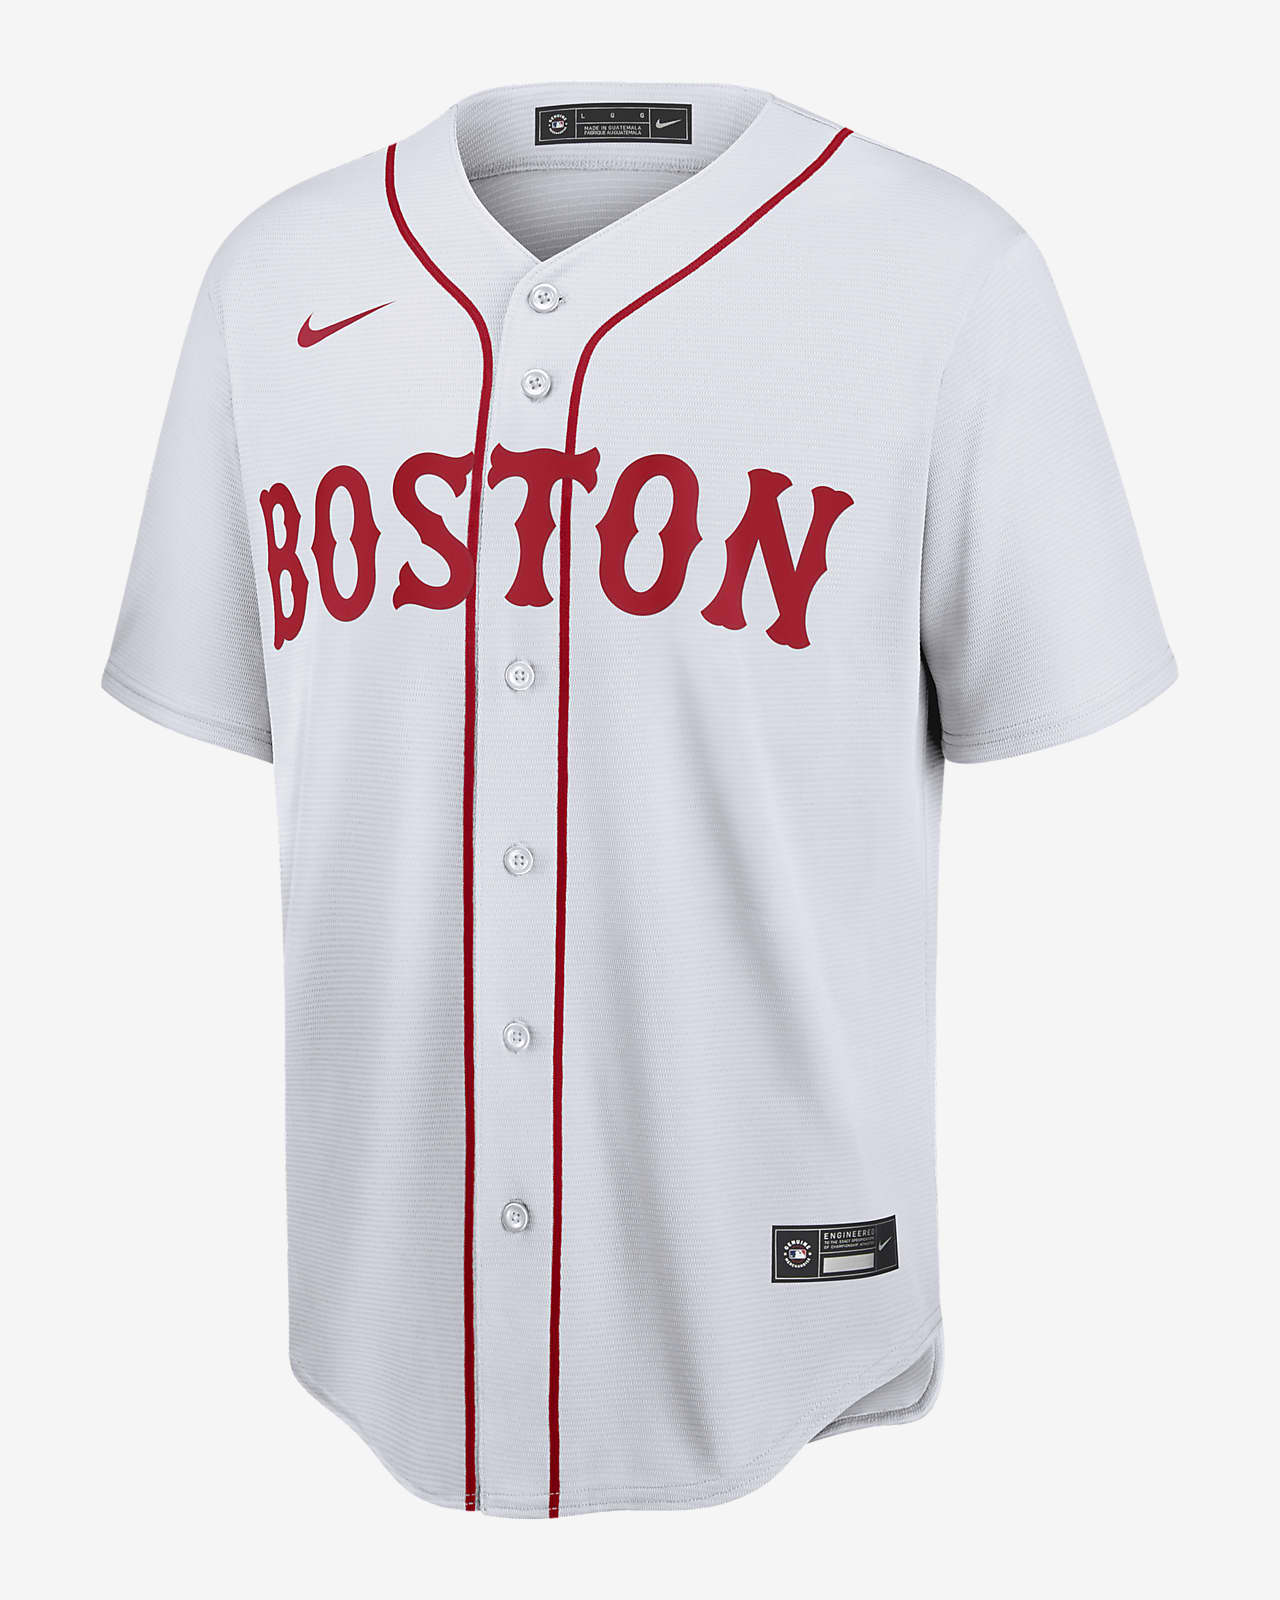 cargando lanzamiento en un día festivo Camiseta de béisbol réplica para hombre MLB Boston Red Sox. Nike.com